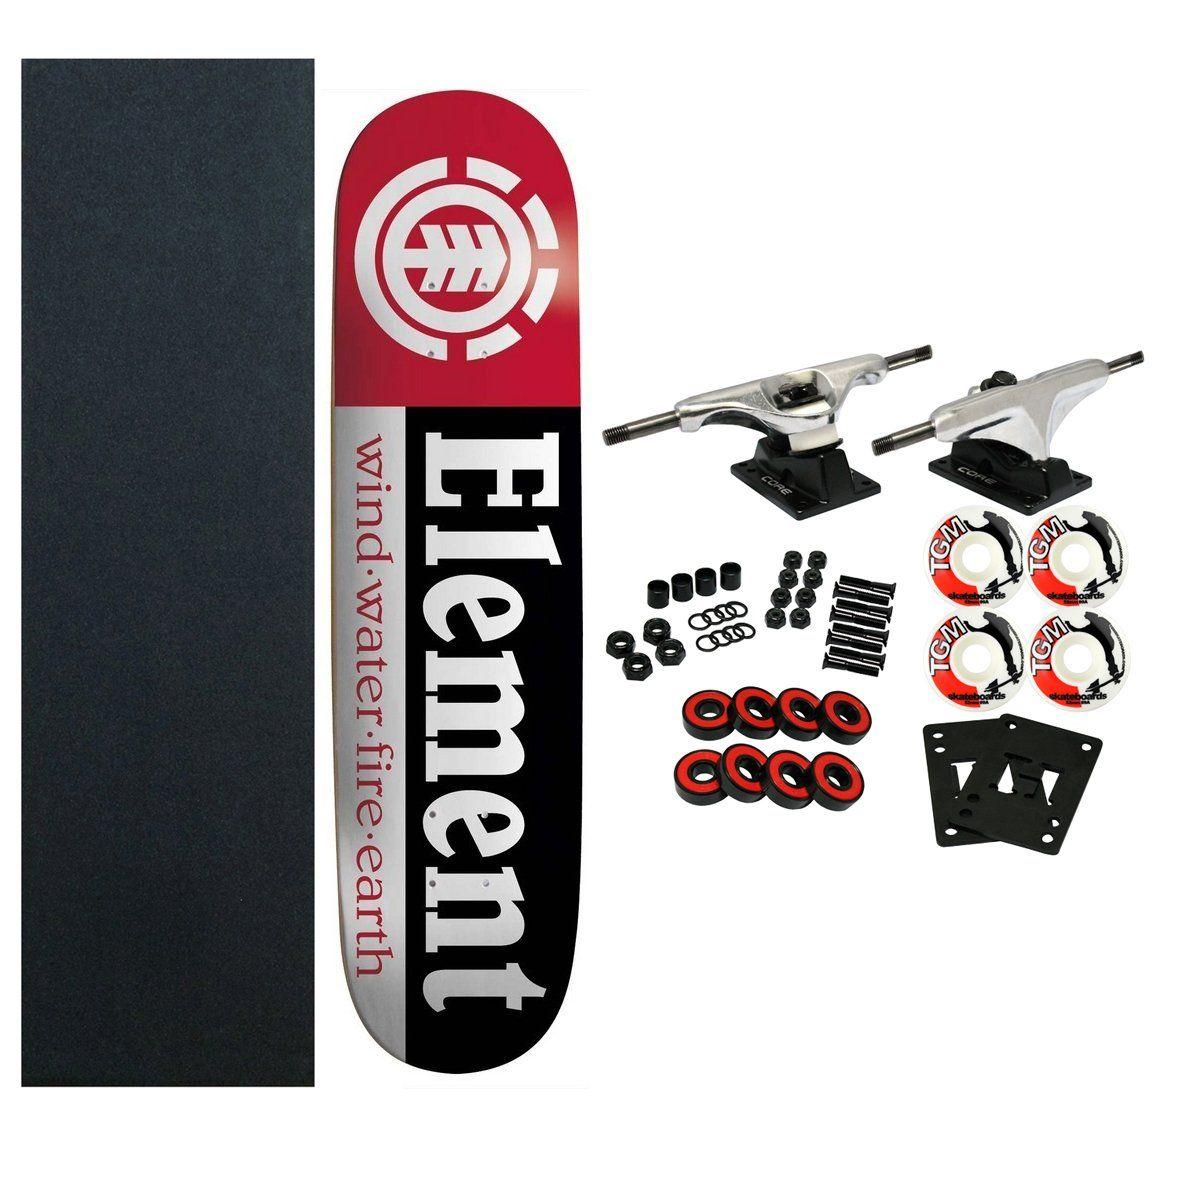 Element Skateboard Logo - Amazon.com : ELEMENT Skateboards SECTION Complete SKATEBOARD Black ...